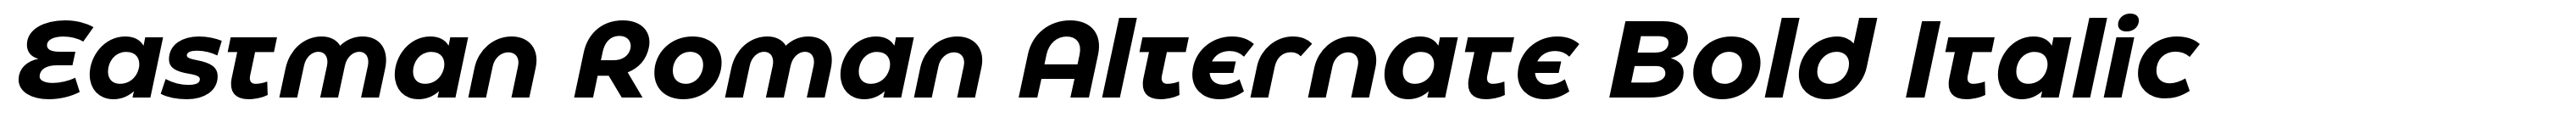 Eastman Roman Alternate Bold Italic